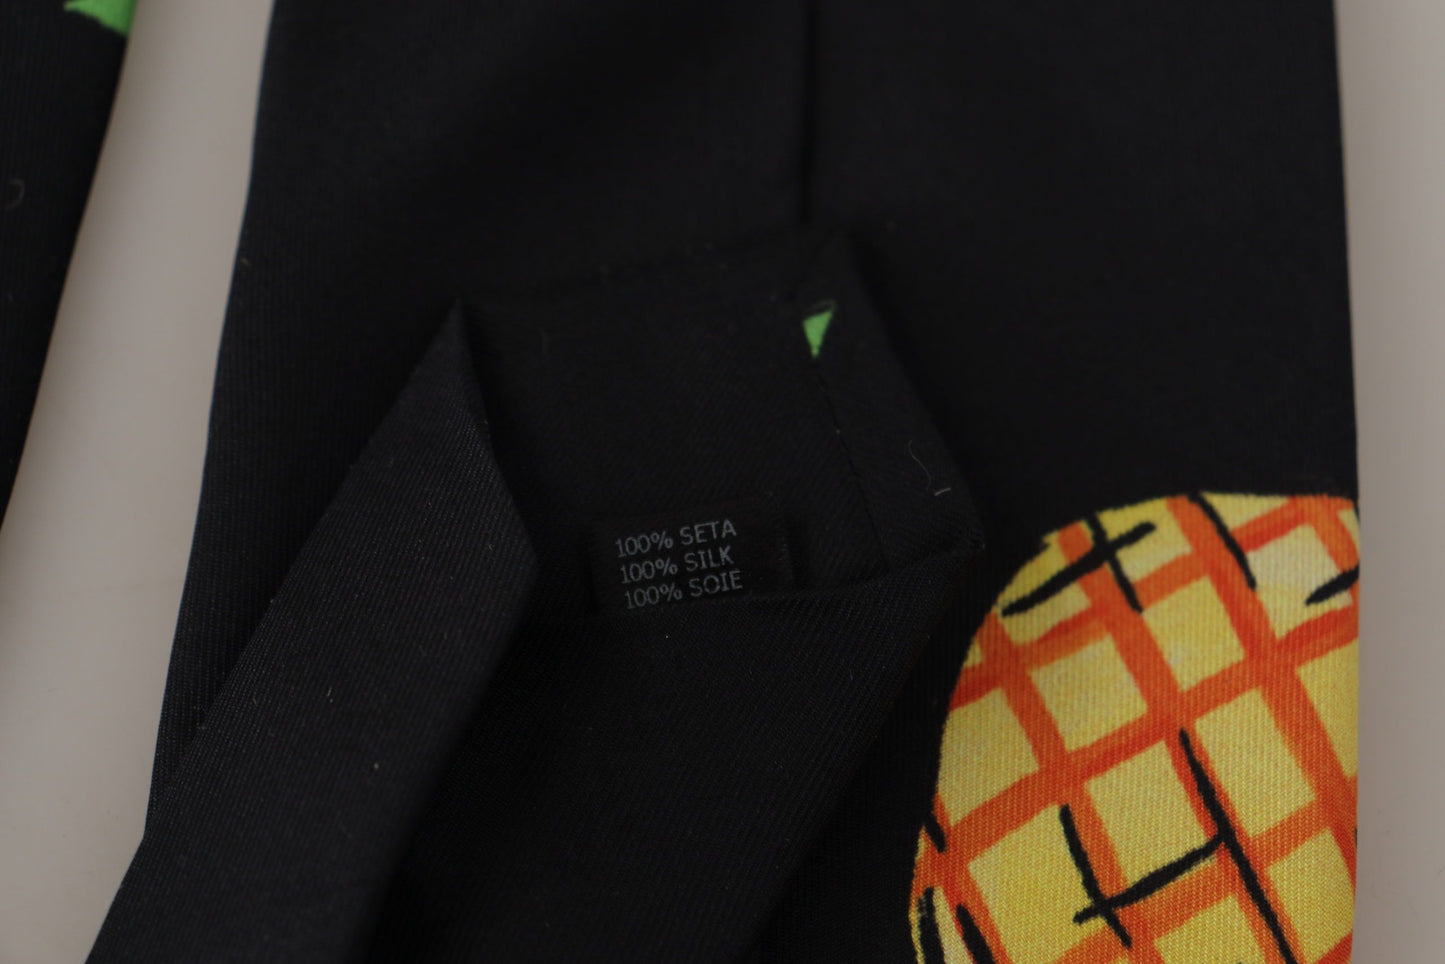 Dolce & Gabbana Black Pineapple Print Necktie Accessory Tie